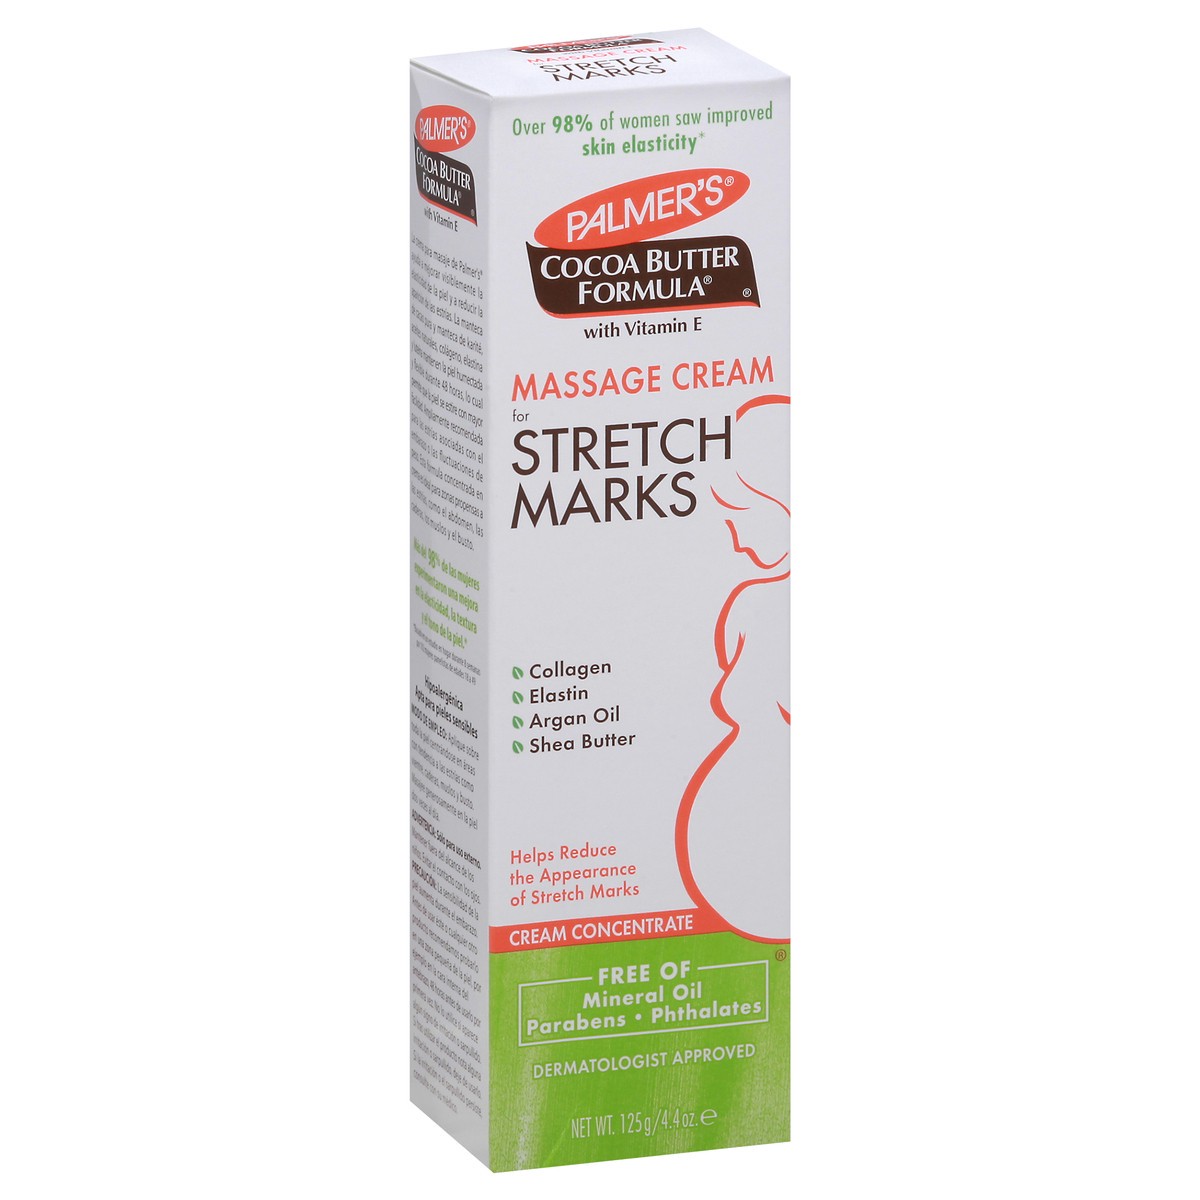 slide 2 of 12, Palmer's Cocoa Butter Formula Massage Cream for Stretch Marks, 4.4 oz., 4.4 oz